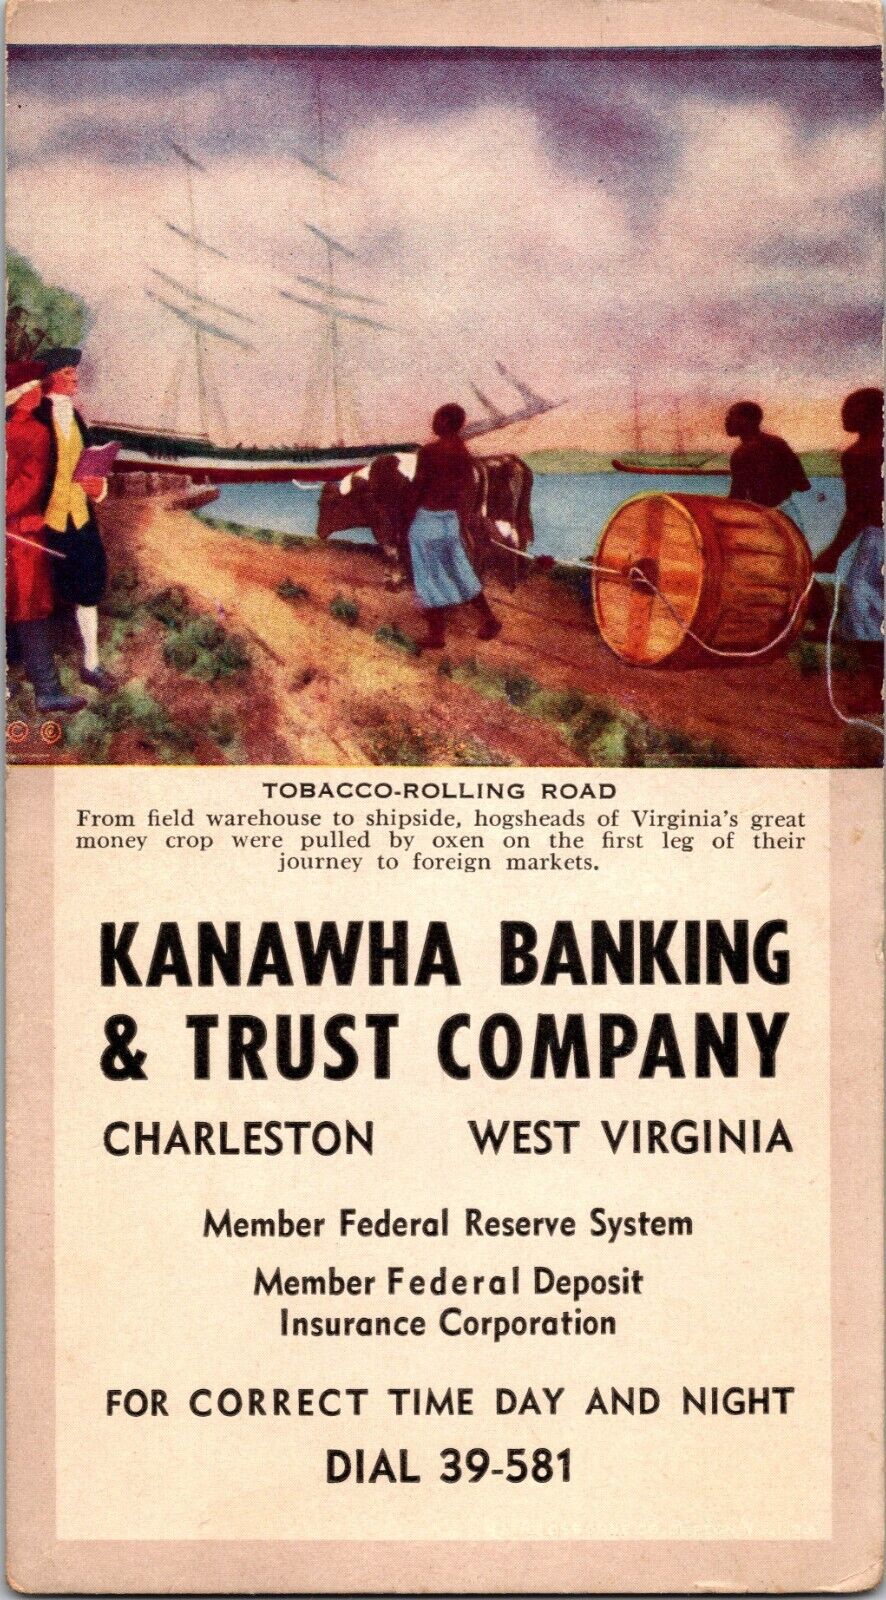 Charleston WVA Kanawha Banking & Trust Company Ink Blotter Tobacco-Rolling Road